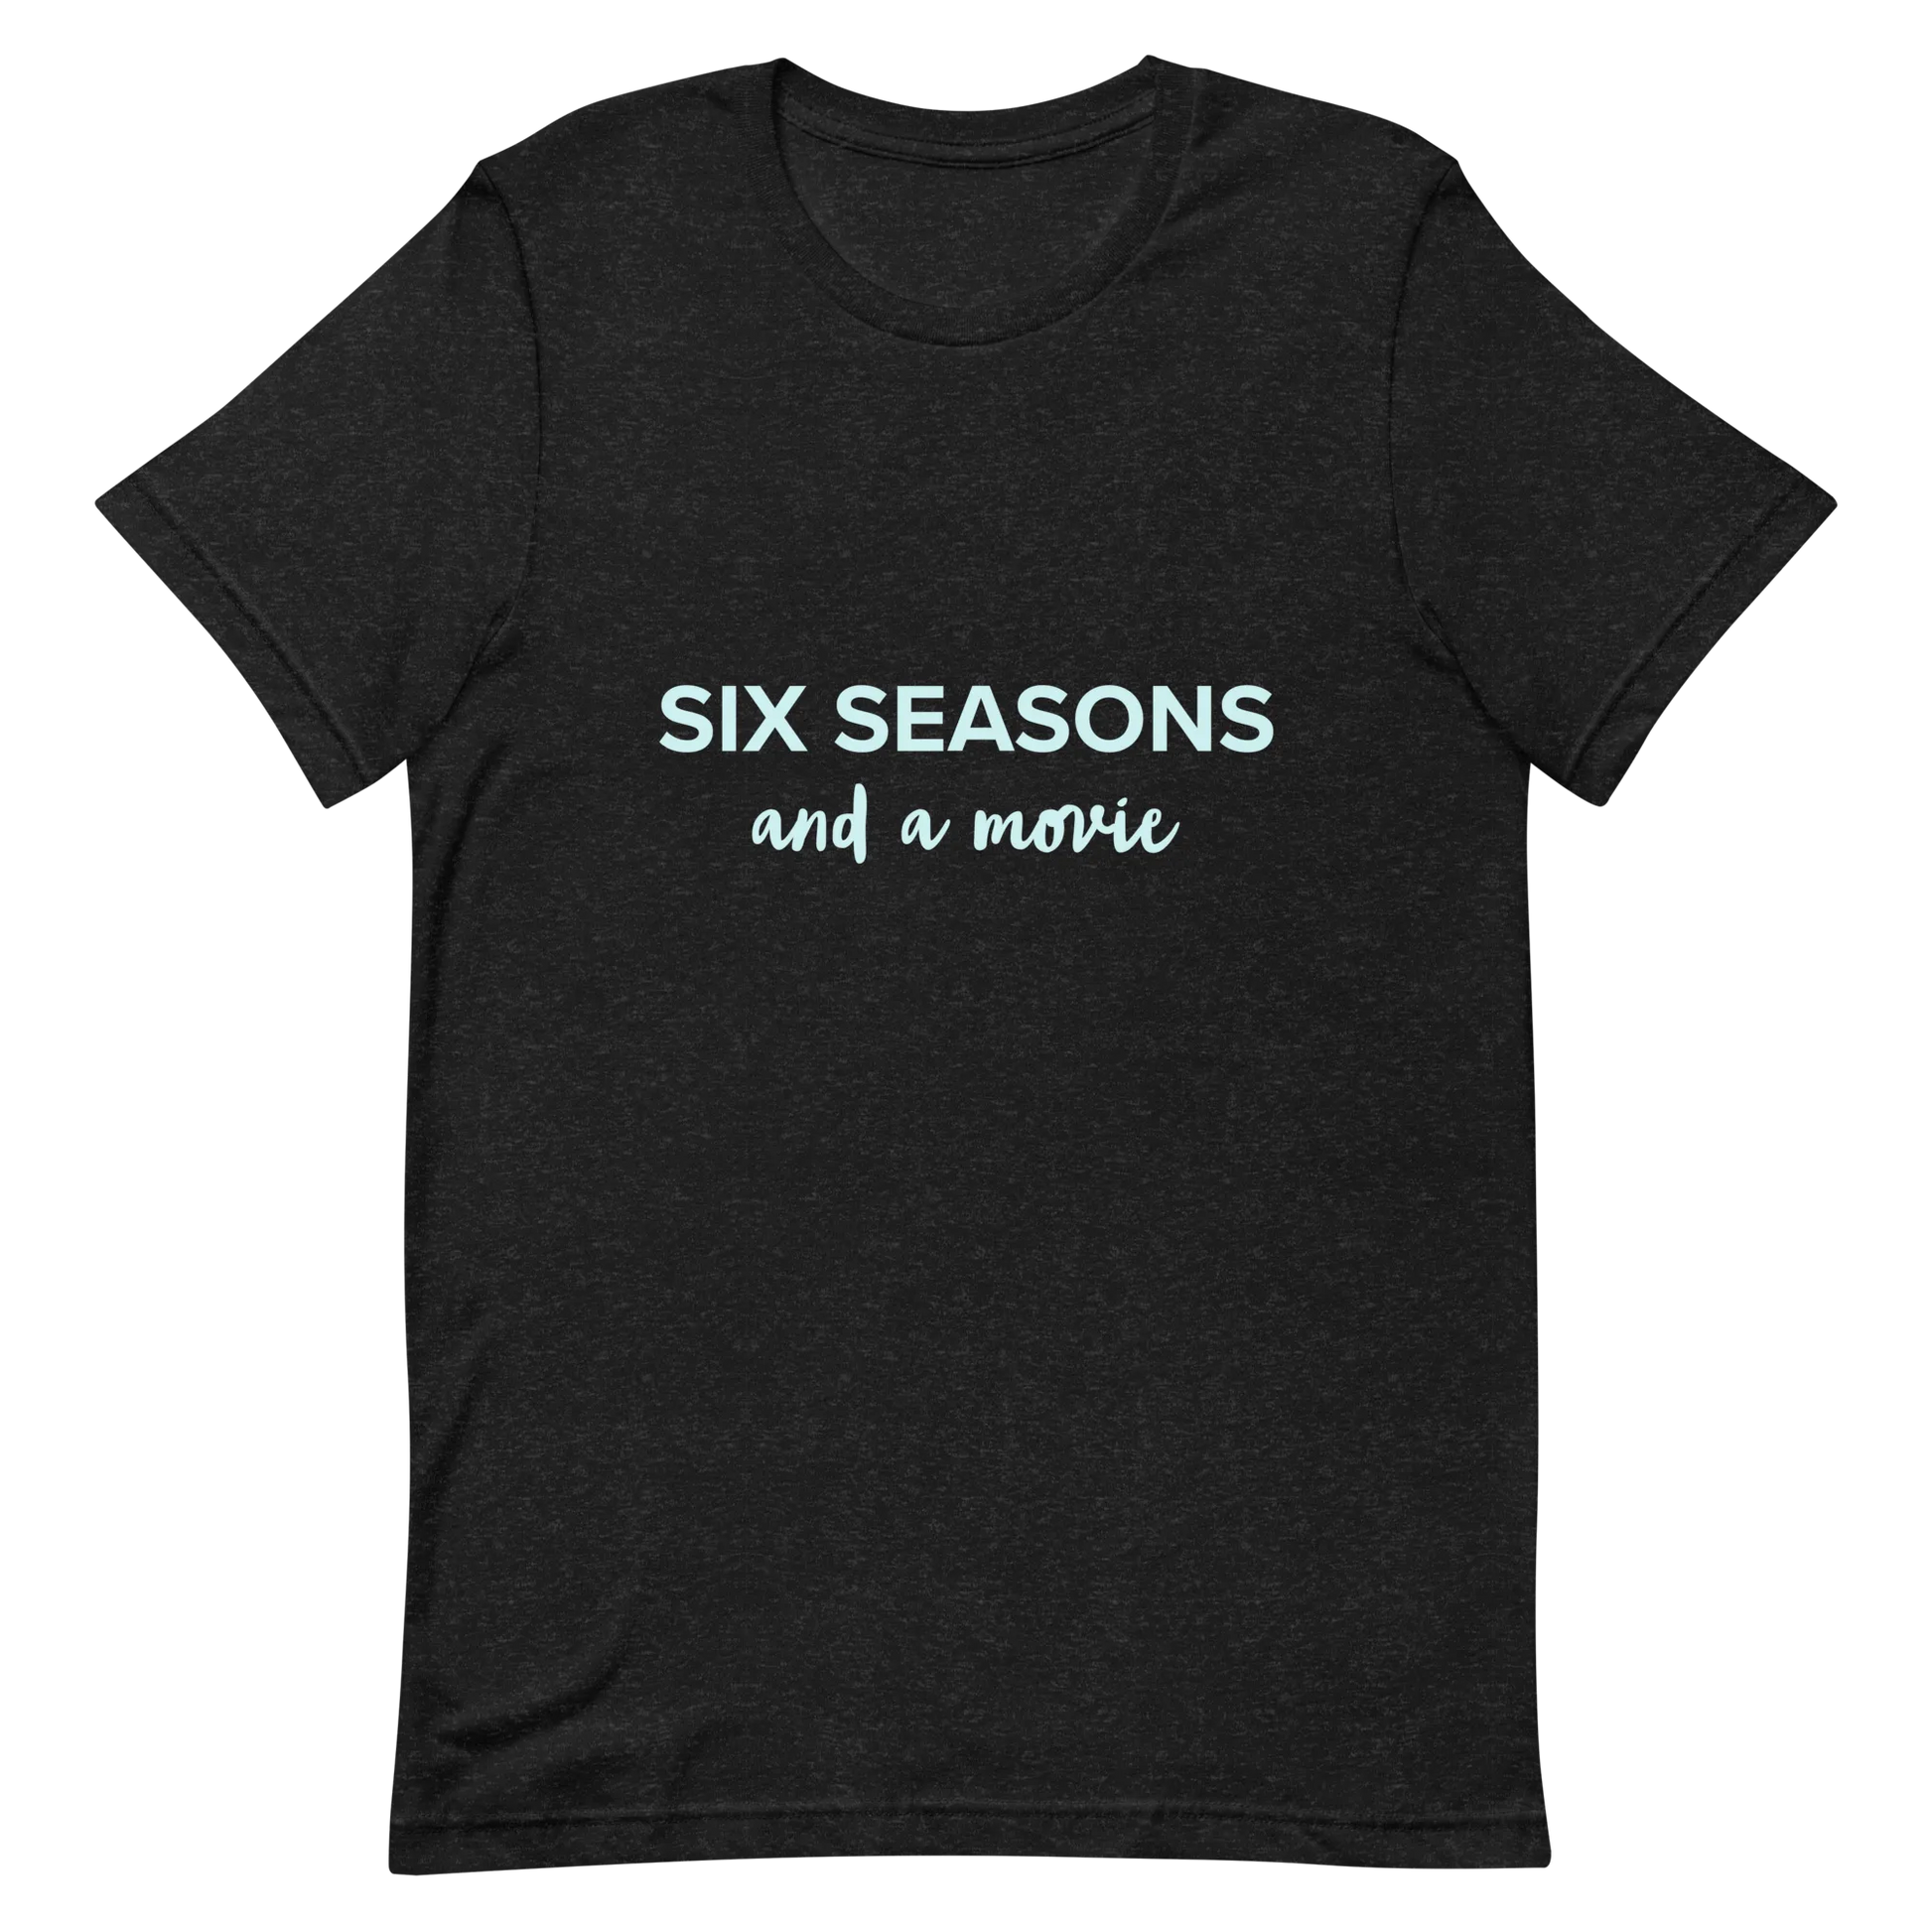 Six Seasons and a Movie Tee in Black Heather flatlay